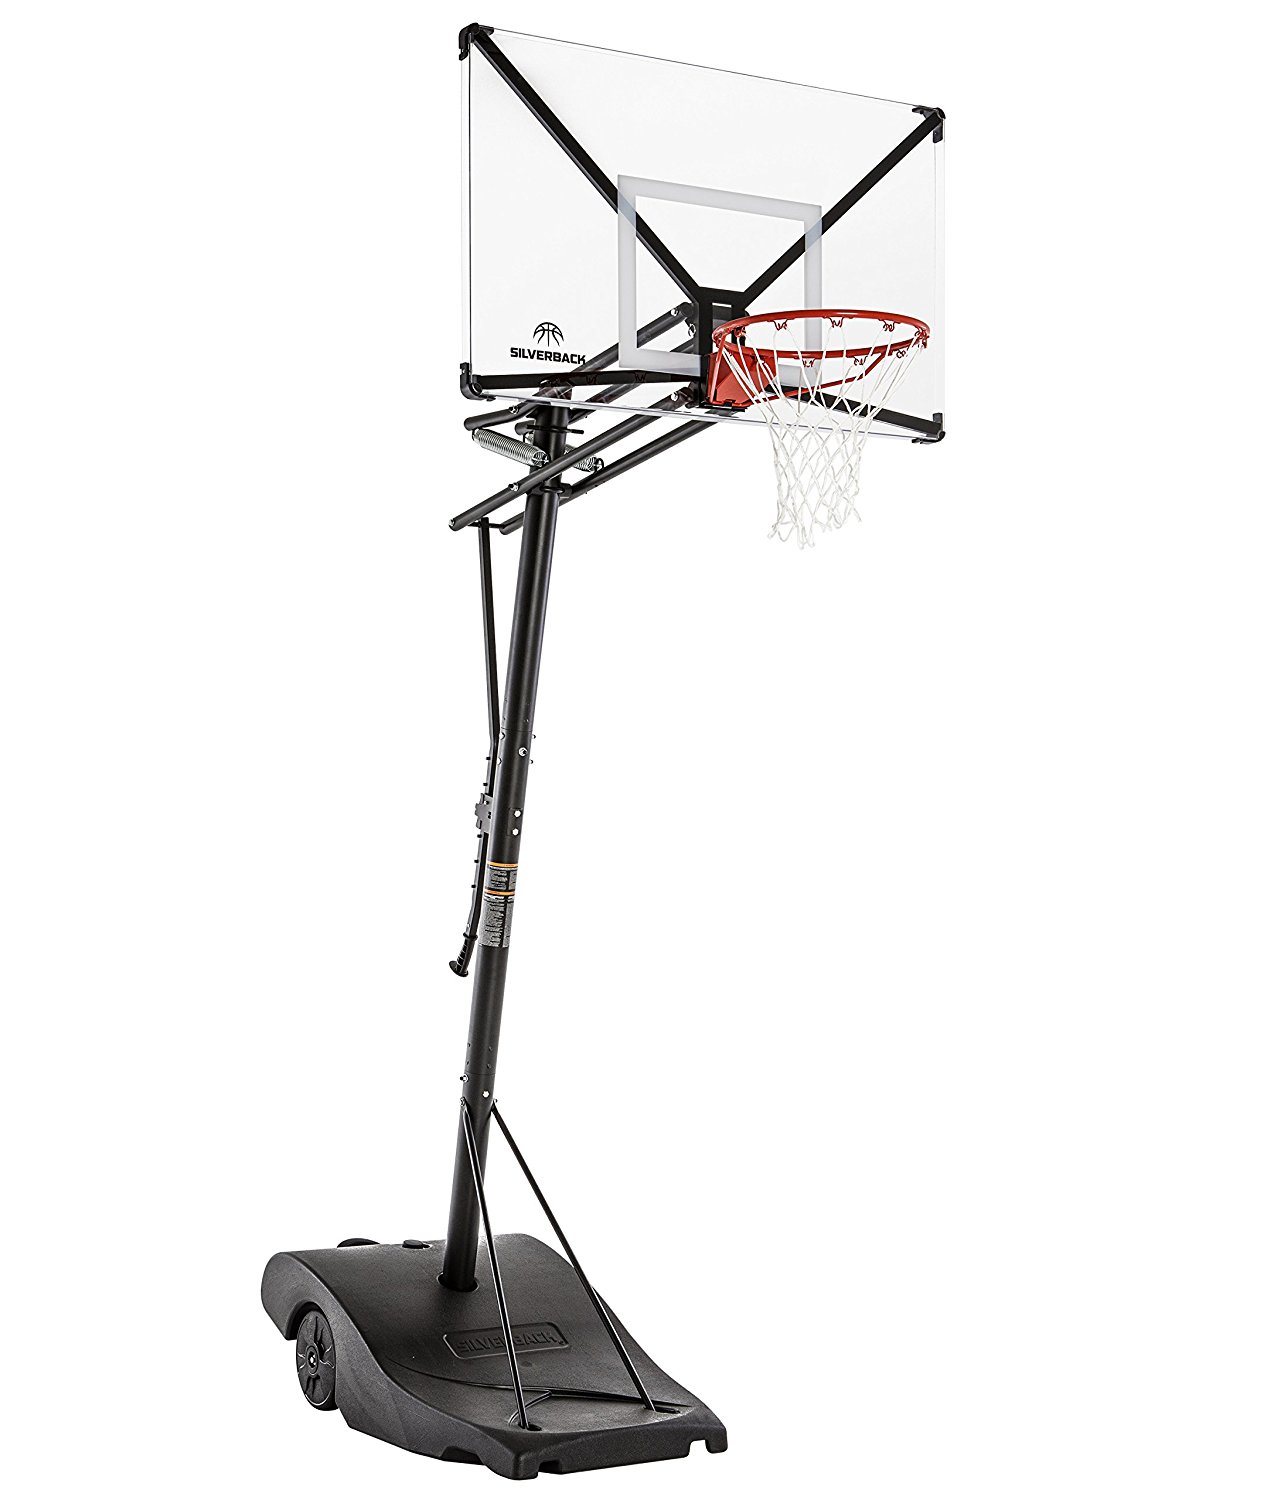 Silverback NXT Portable Basketball Hoop – Just $479.99!